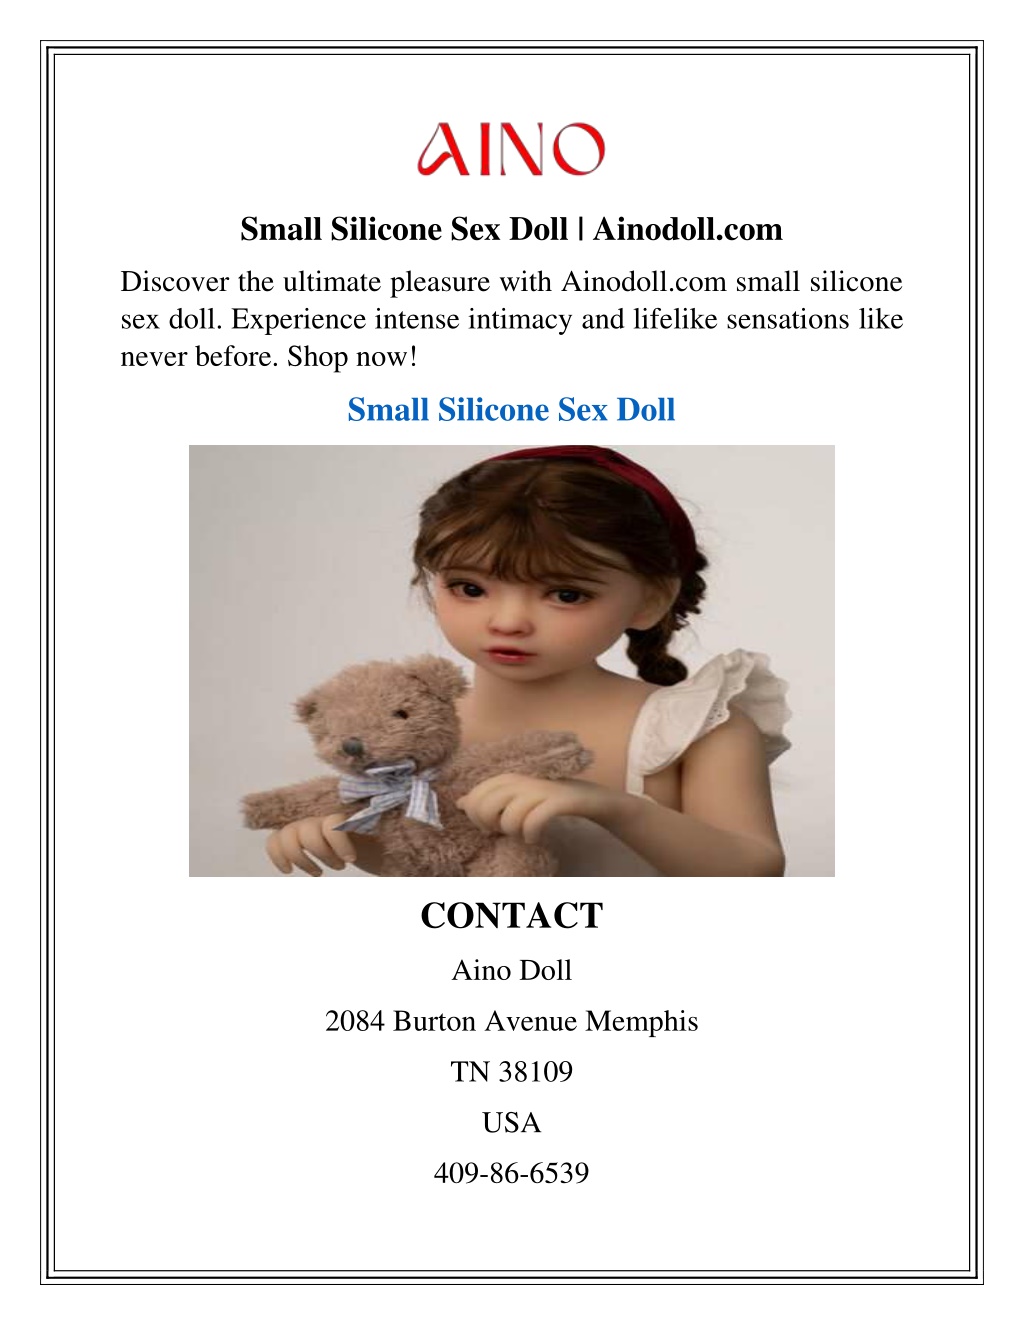 small silicone sex doll ainodoll com l.w